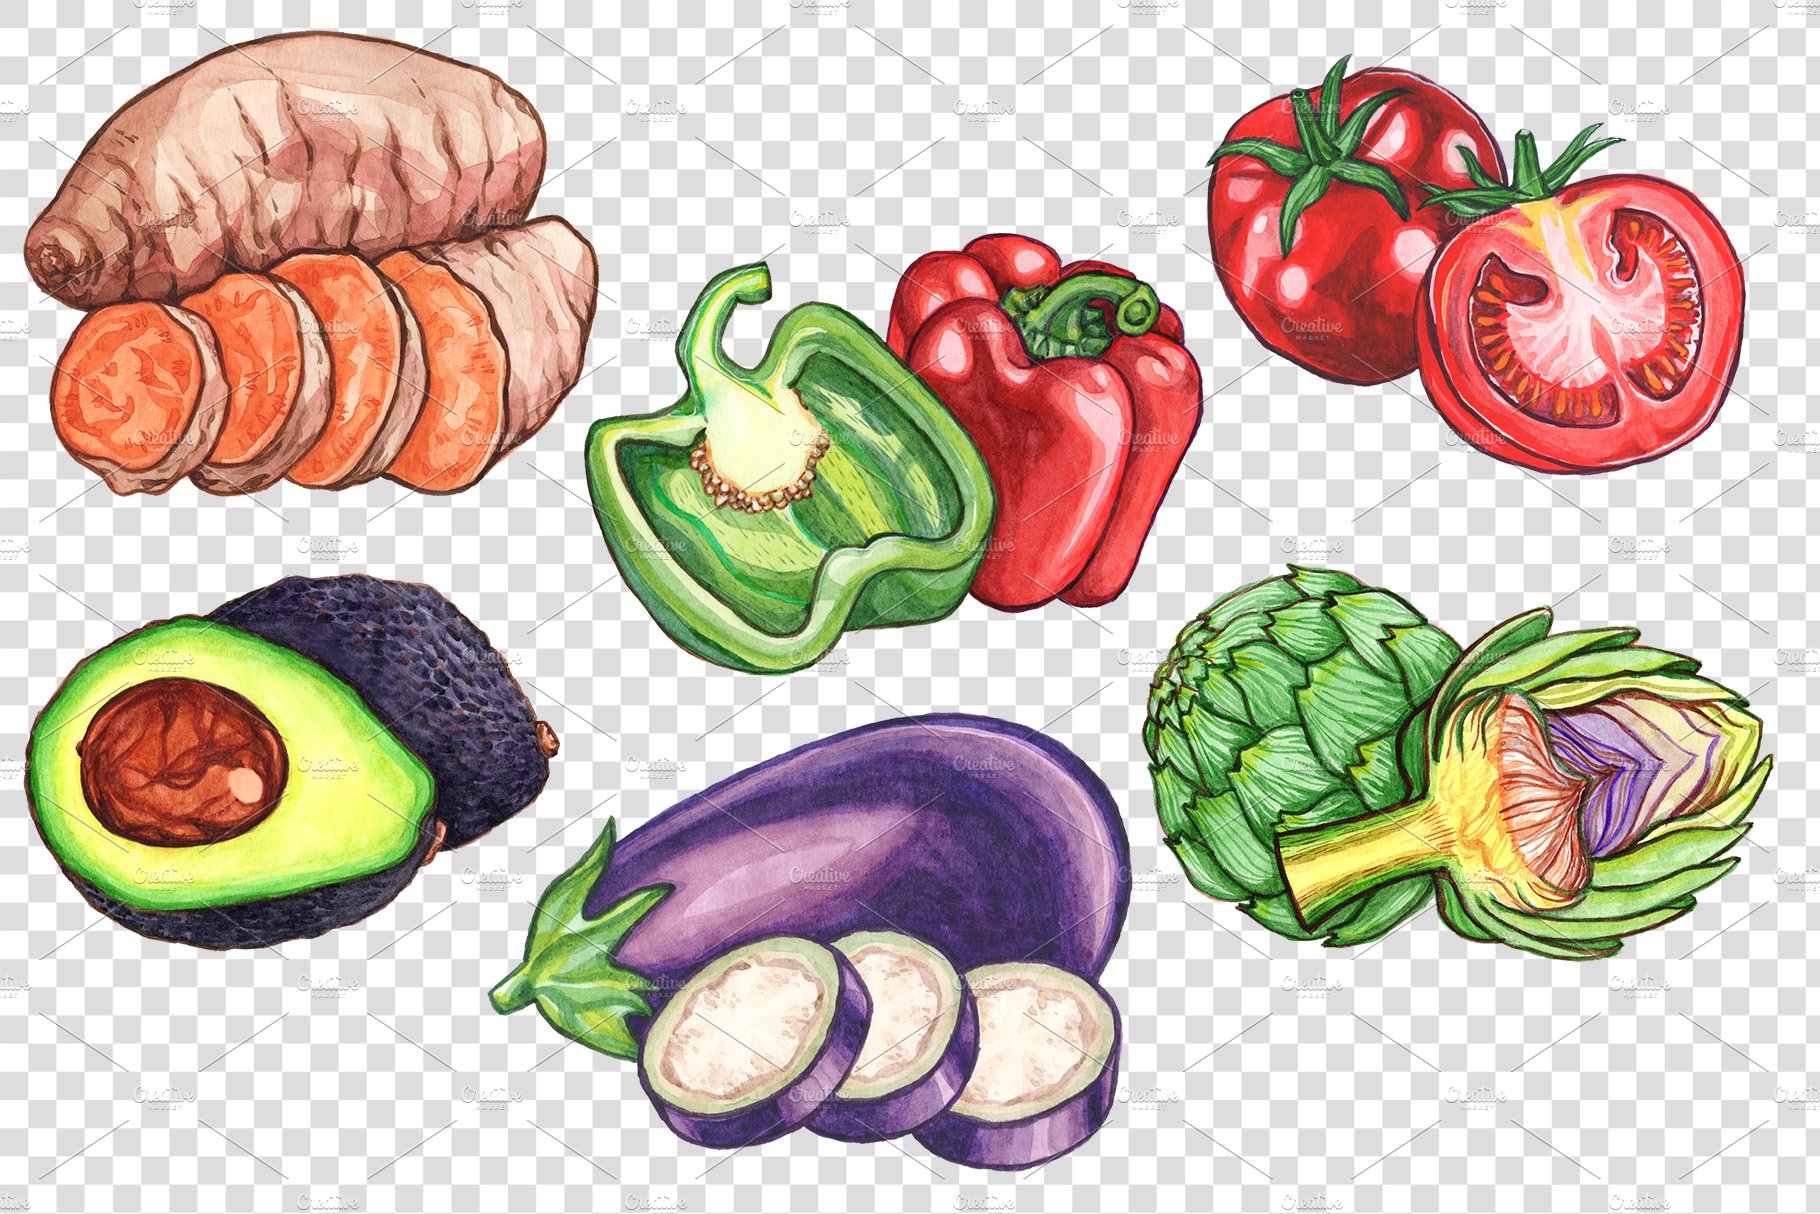 Realistic food illustrations.